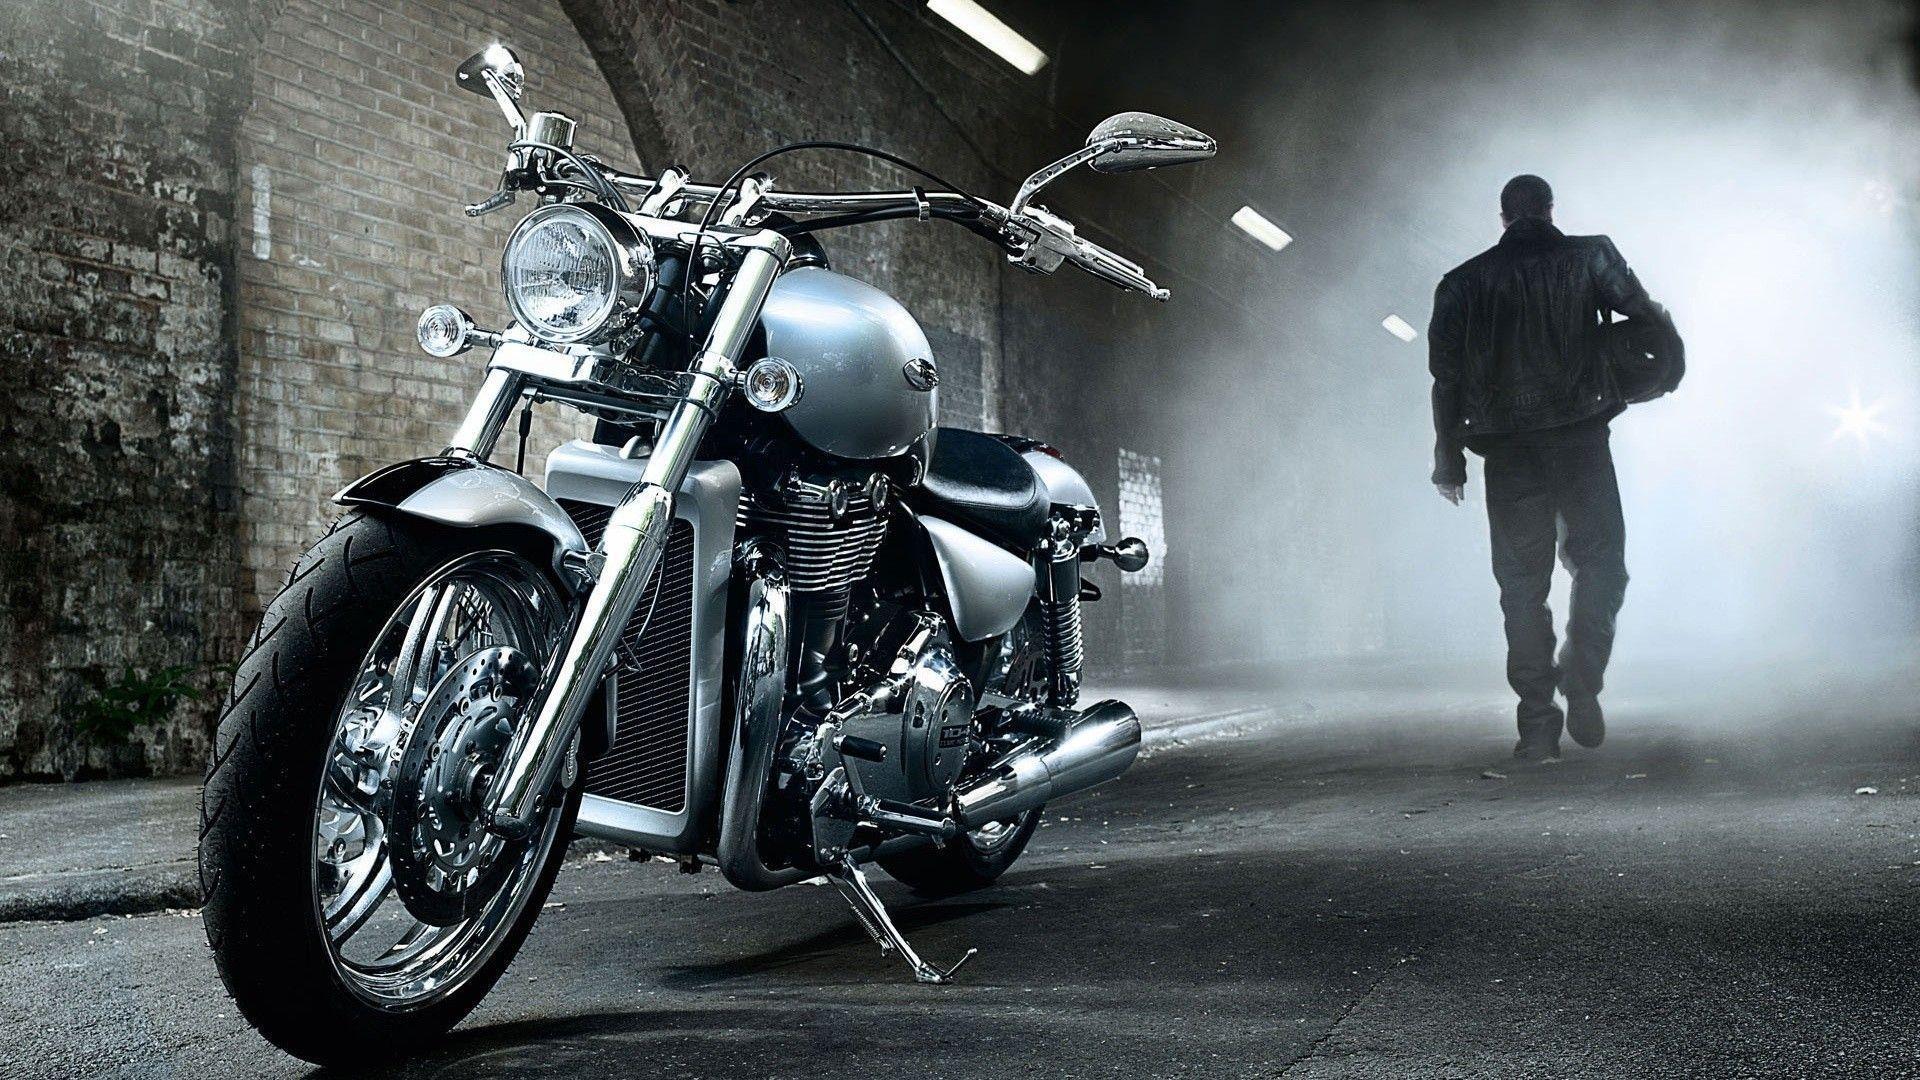 Harley Davidson Wallpapers - Top Free